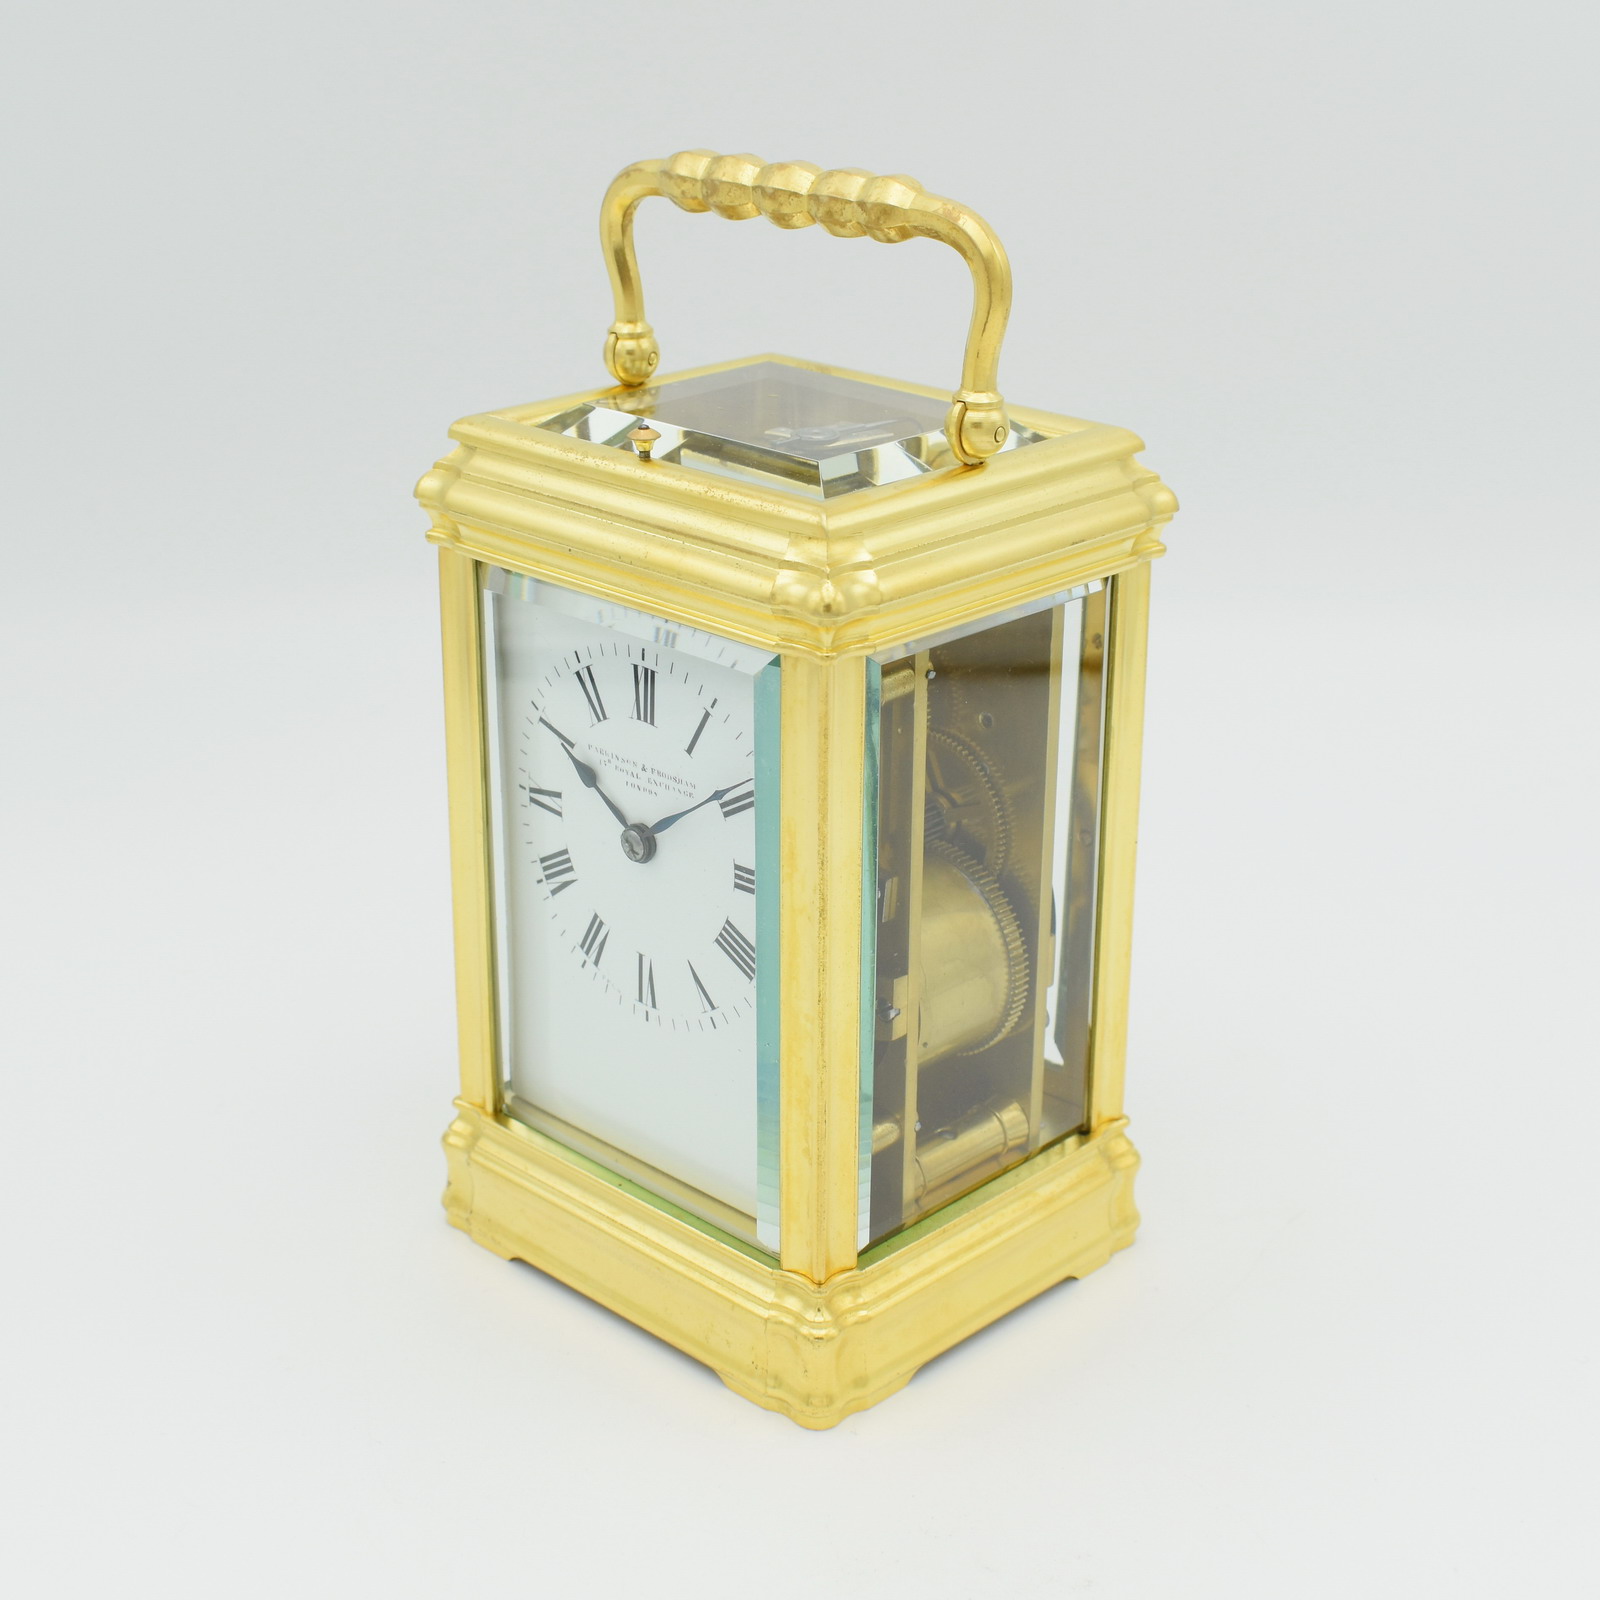 Parkinson & Frodsham Carriage clock – It's About Time